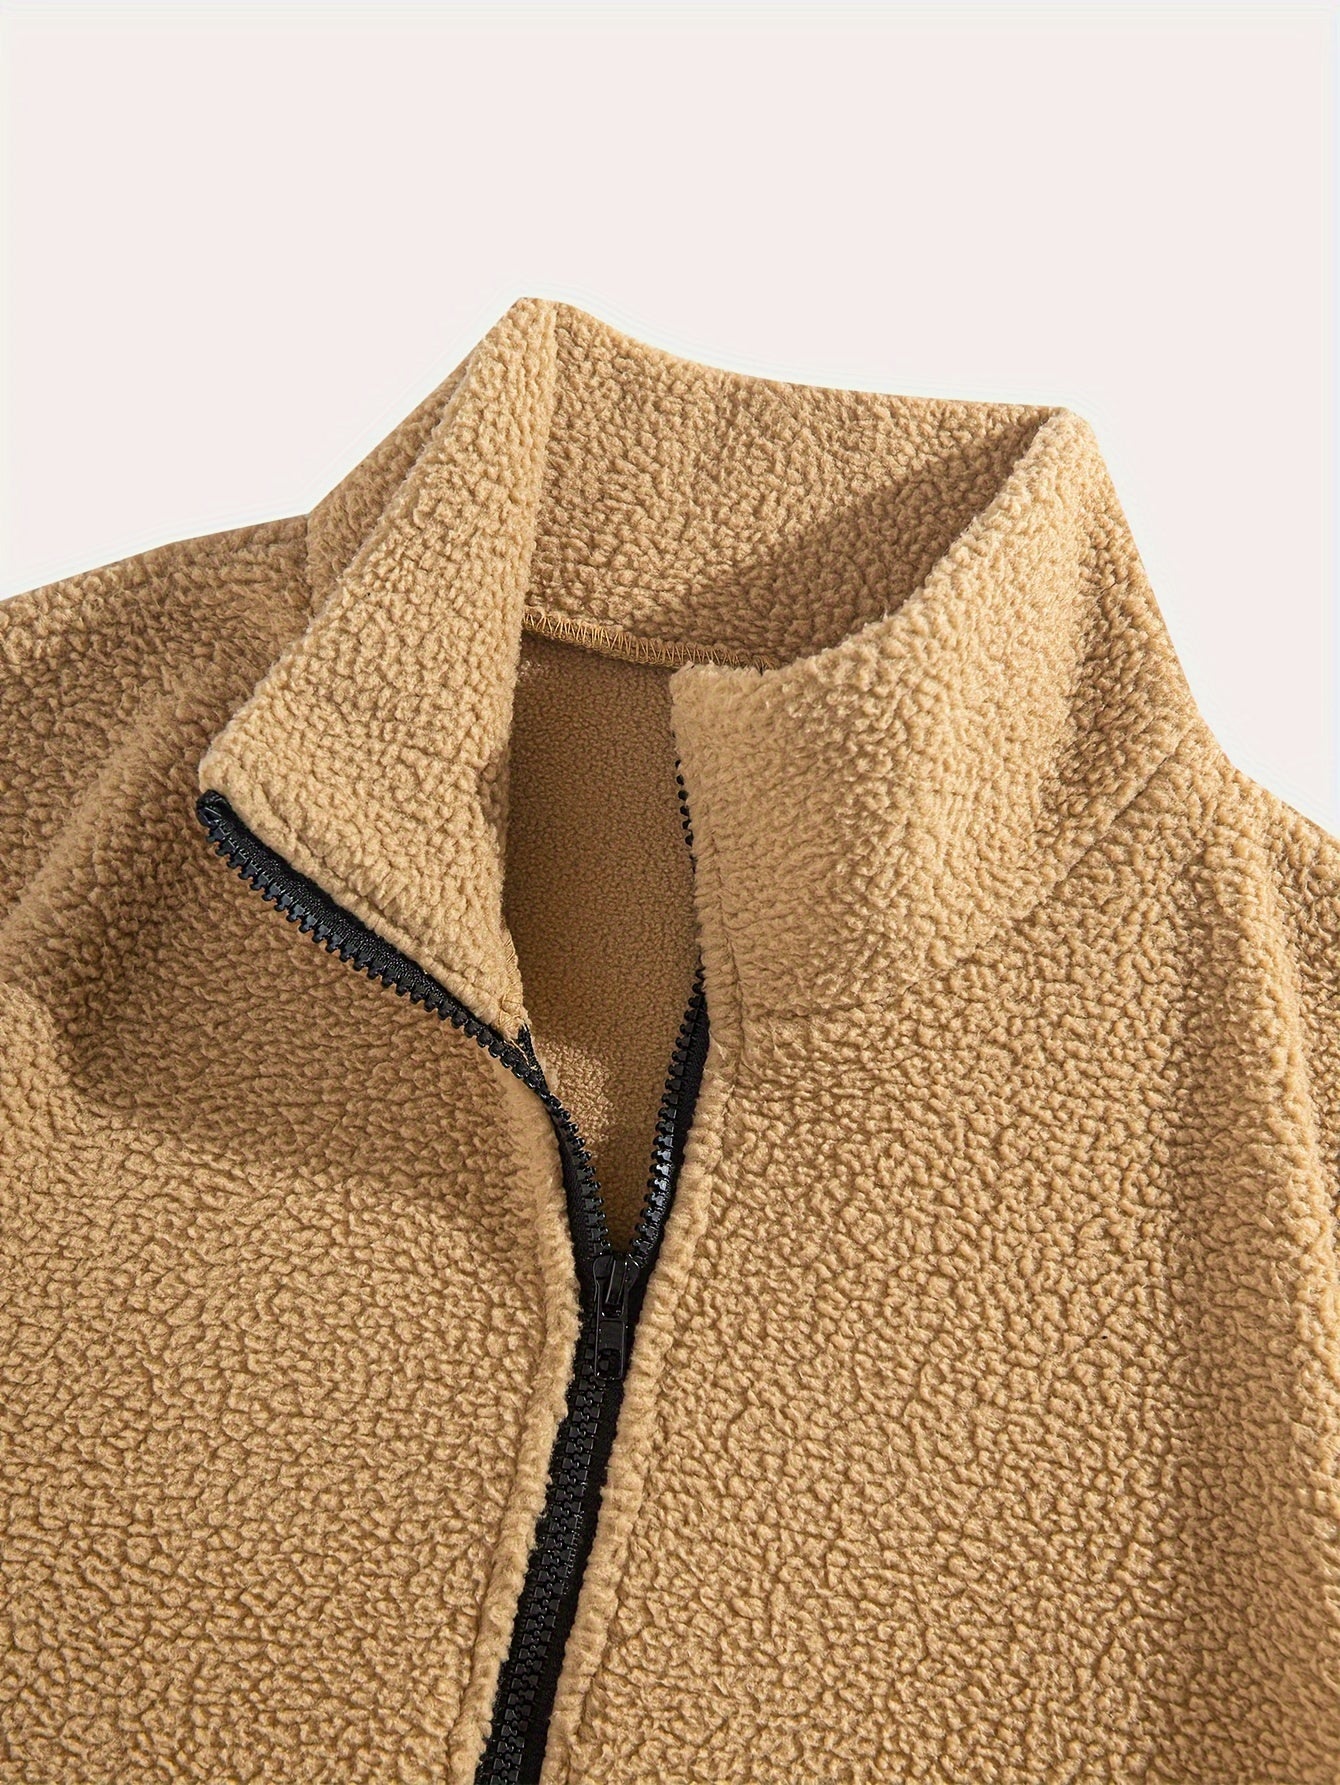 Men's Polar Fleece Jacket - Warm, Stylish and Breathable